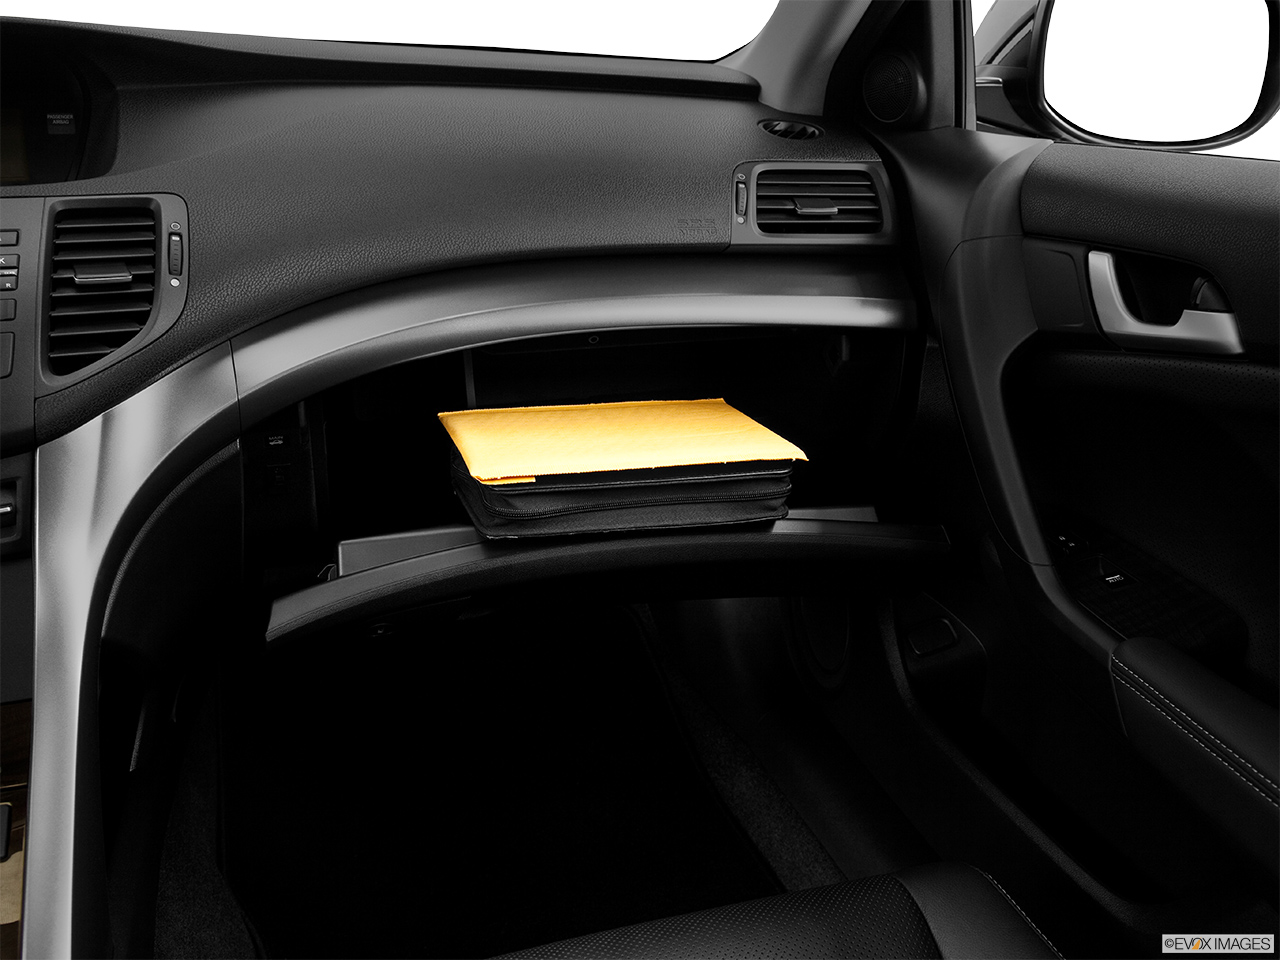 2014 Acura TSX 5-speed Automatic Glove box open. 